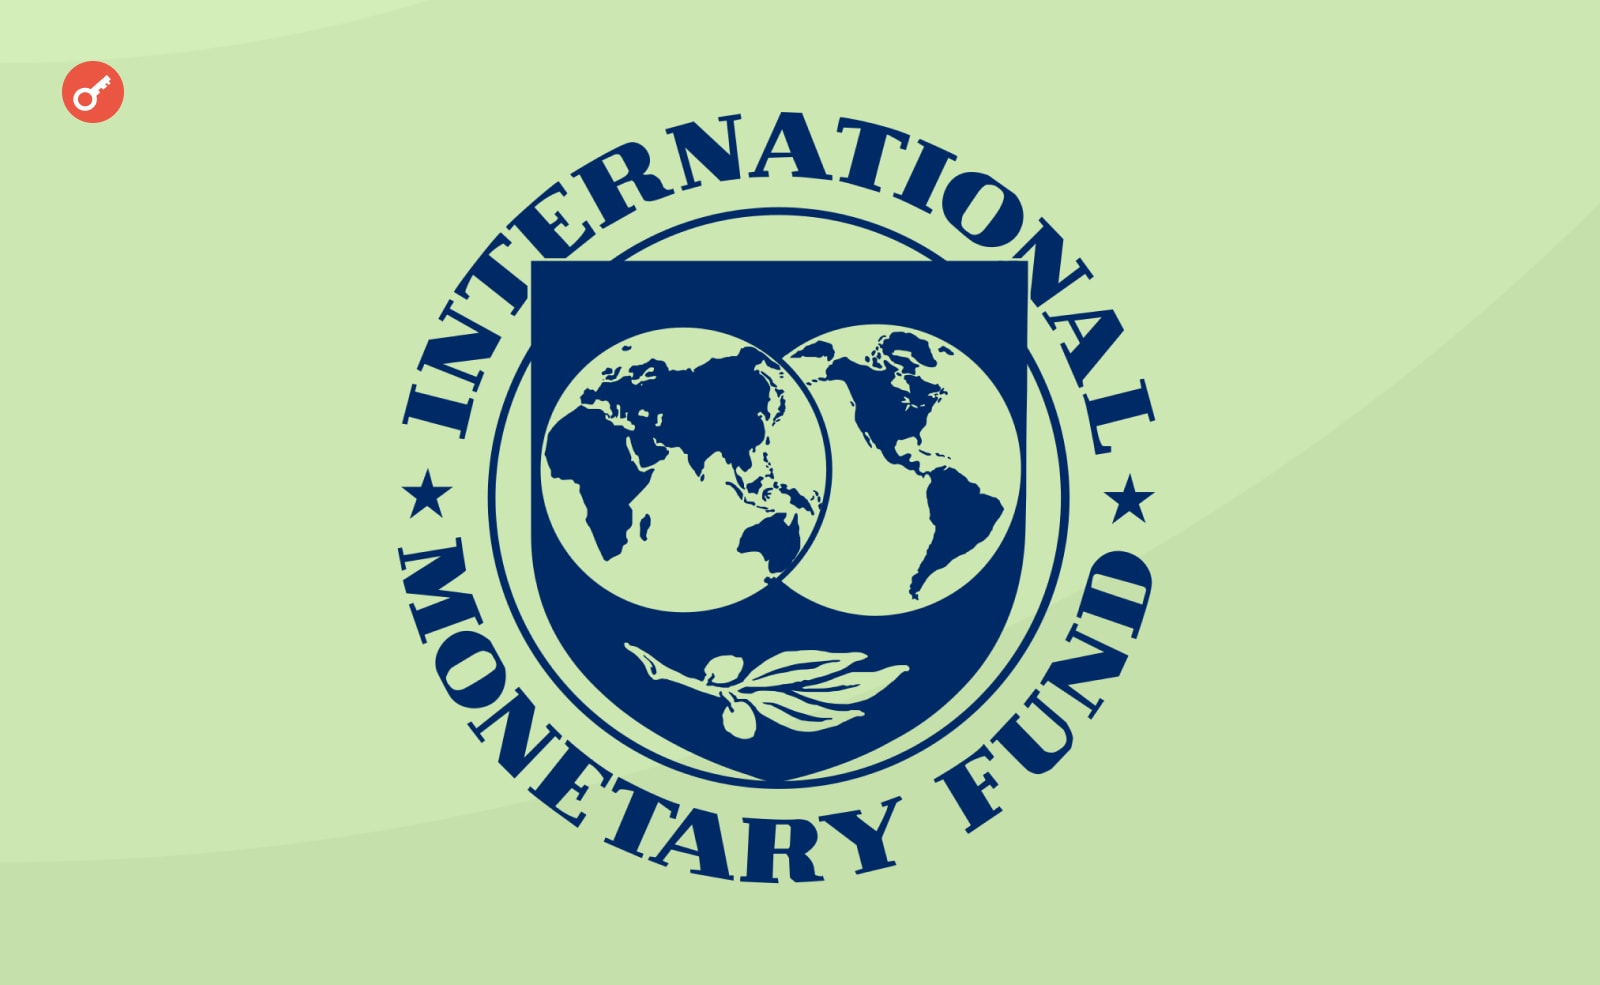 МВФ - Международный валютный фонд, (англ. International Monetary Fund, IMF)